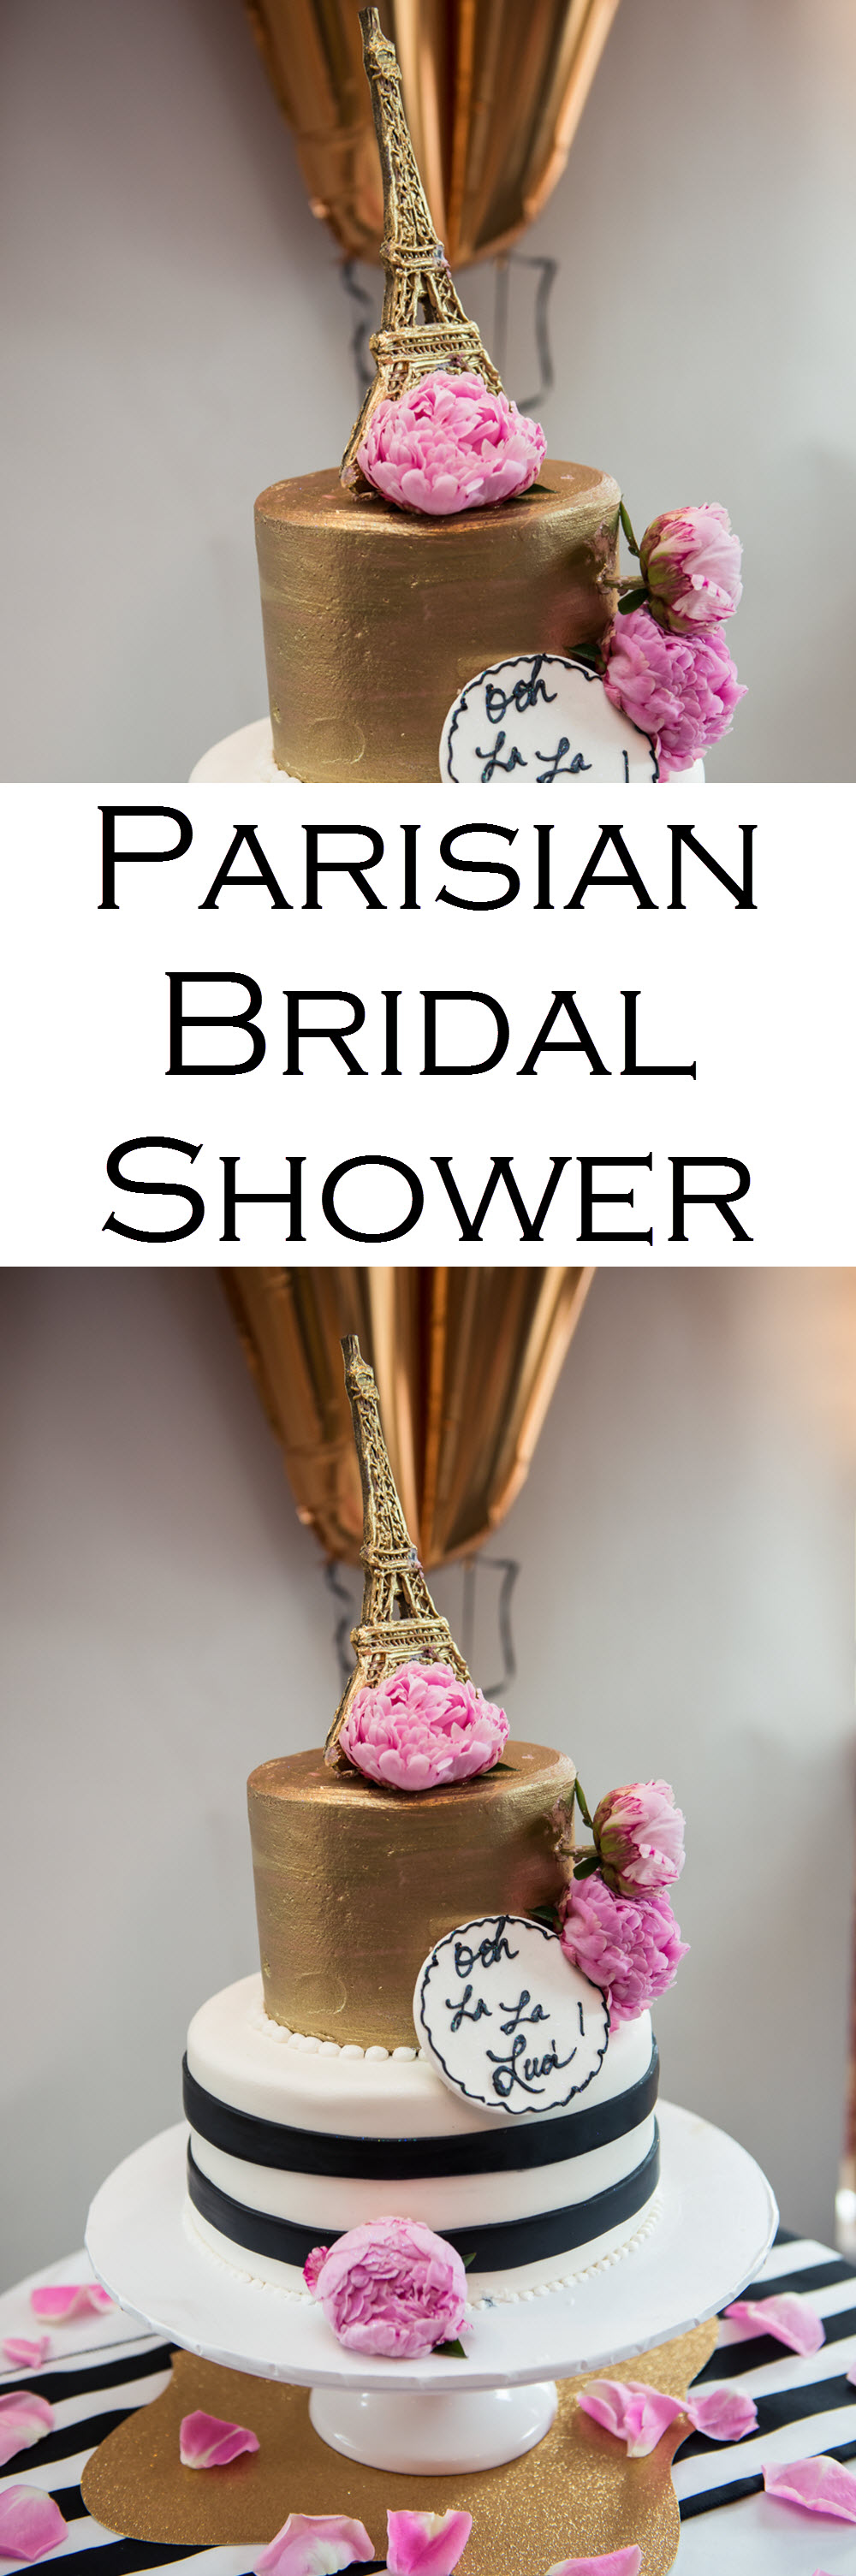 Paris-Themed Bridal Shower Photos, Games, + Decor Ideas